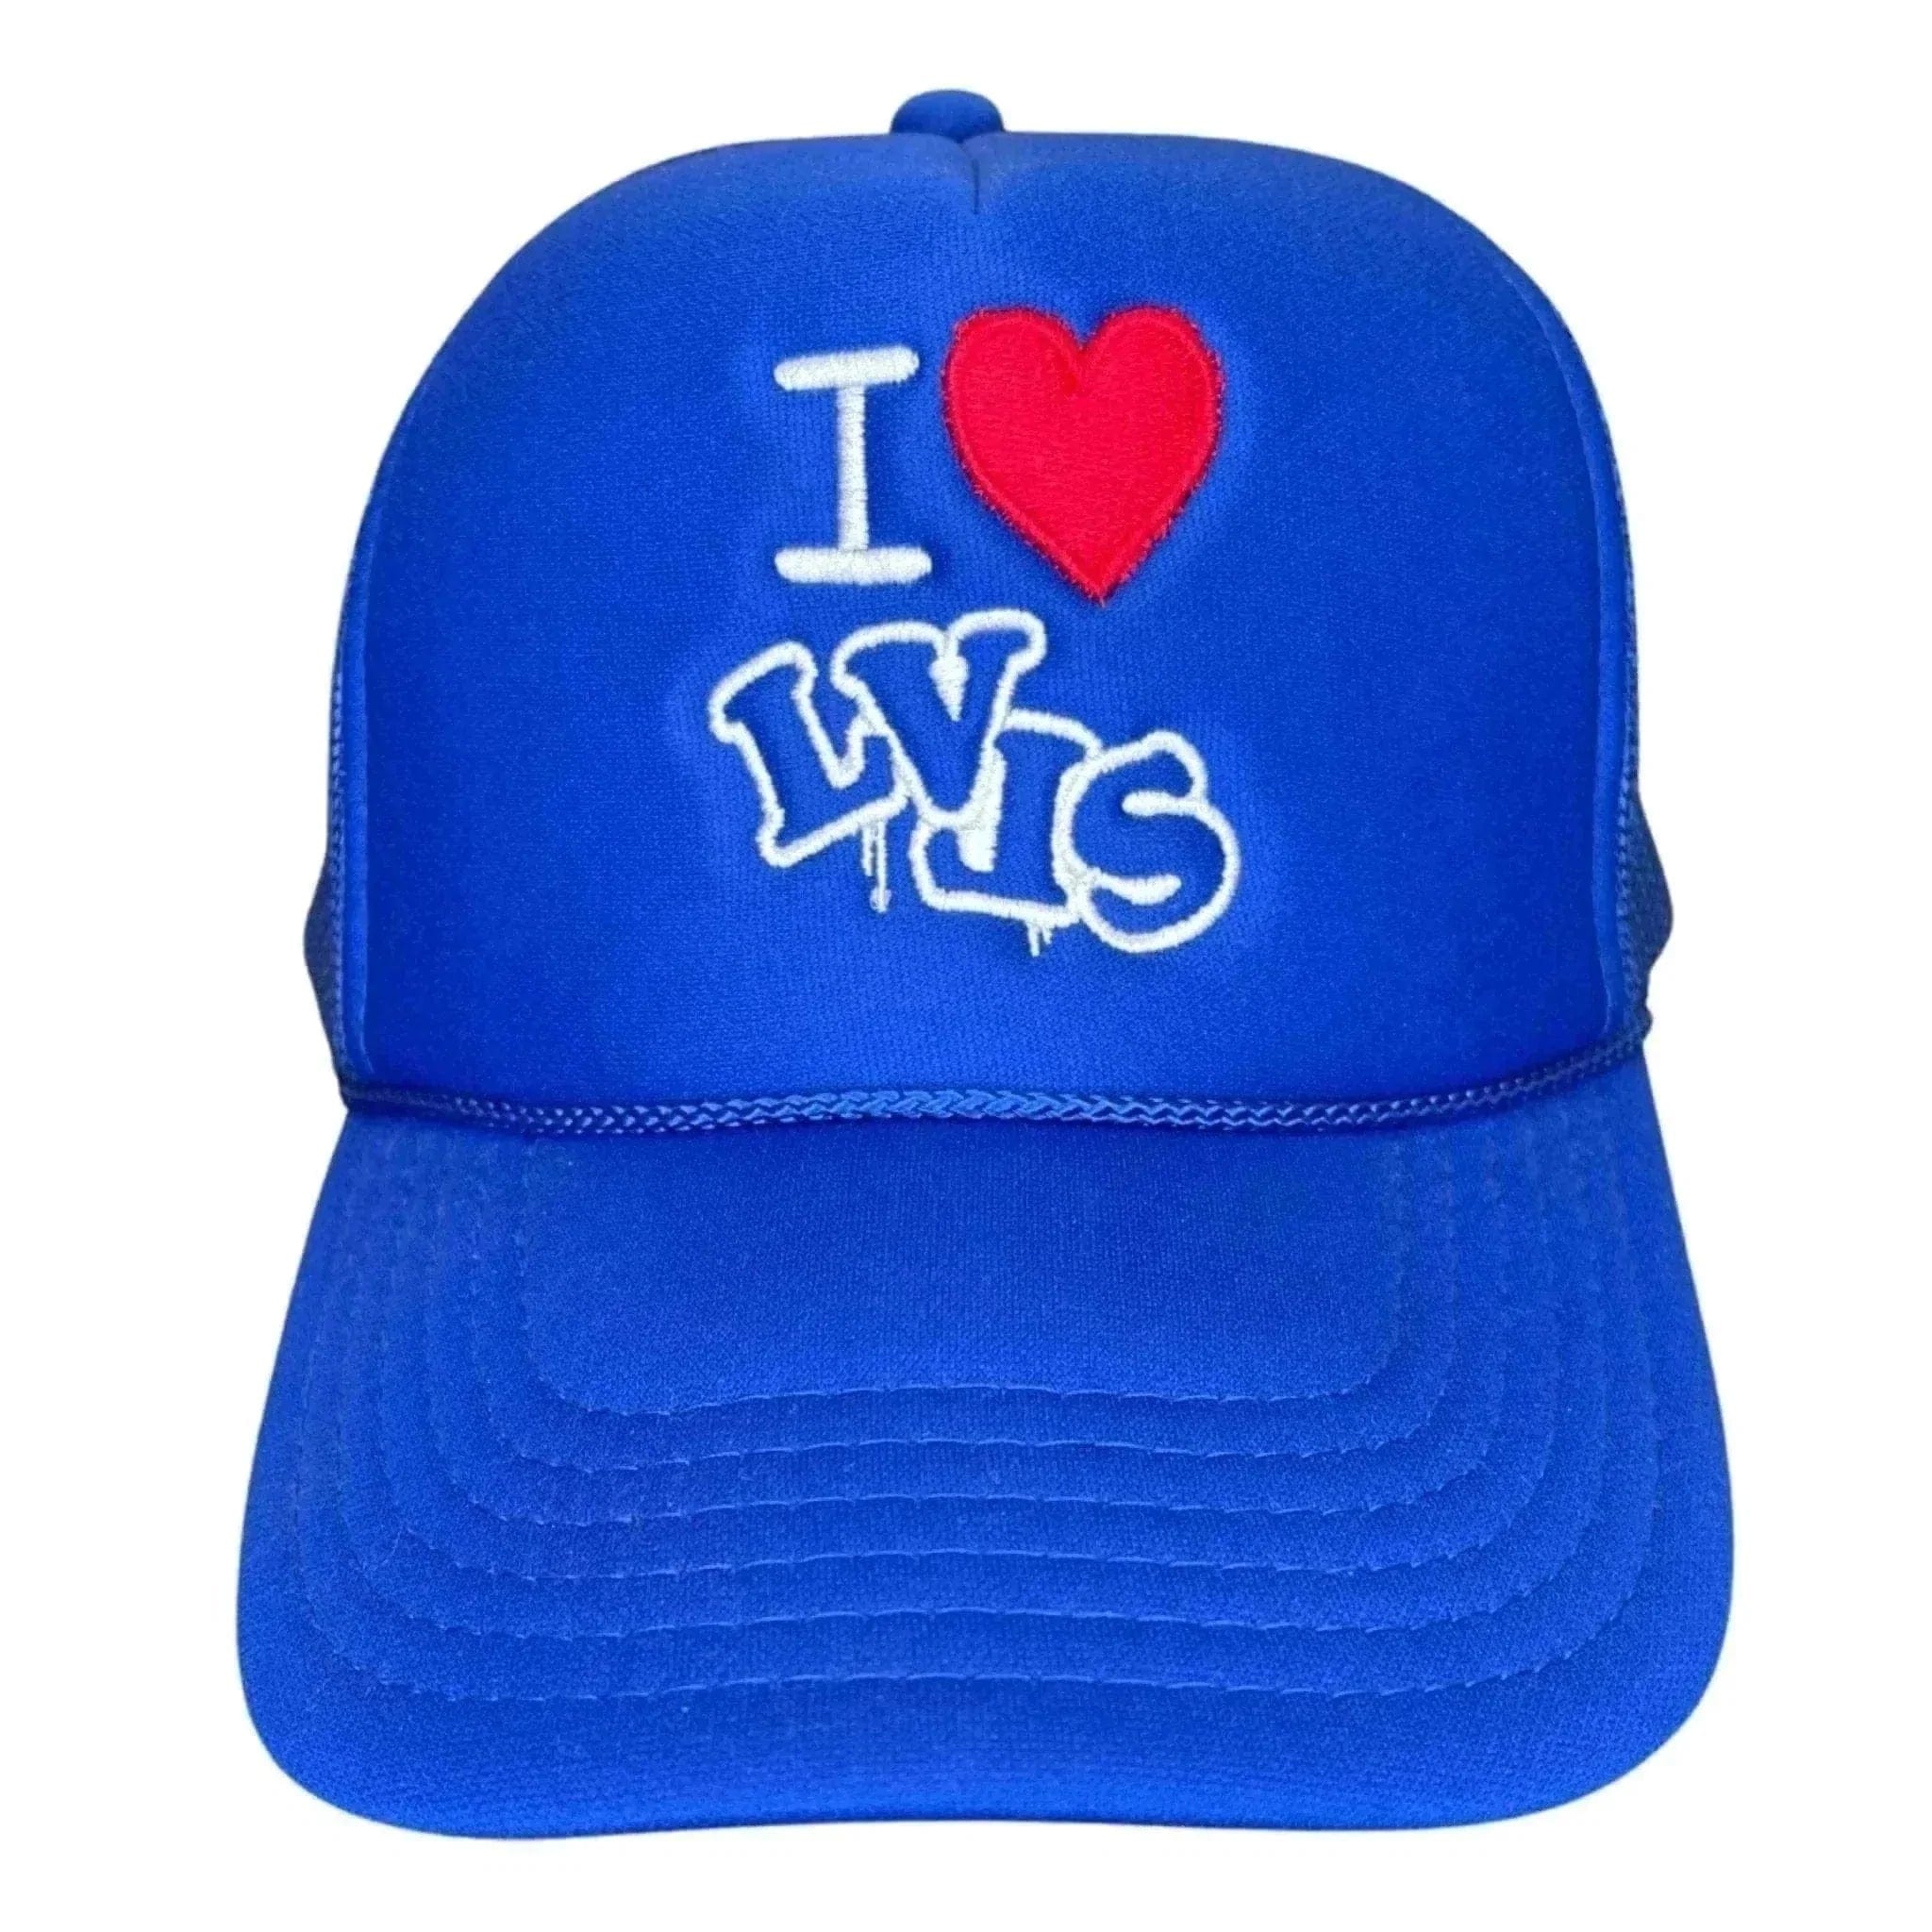 LEVELS, LLC Hats Trucker LVLS Trucker Hat (Blue)